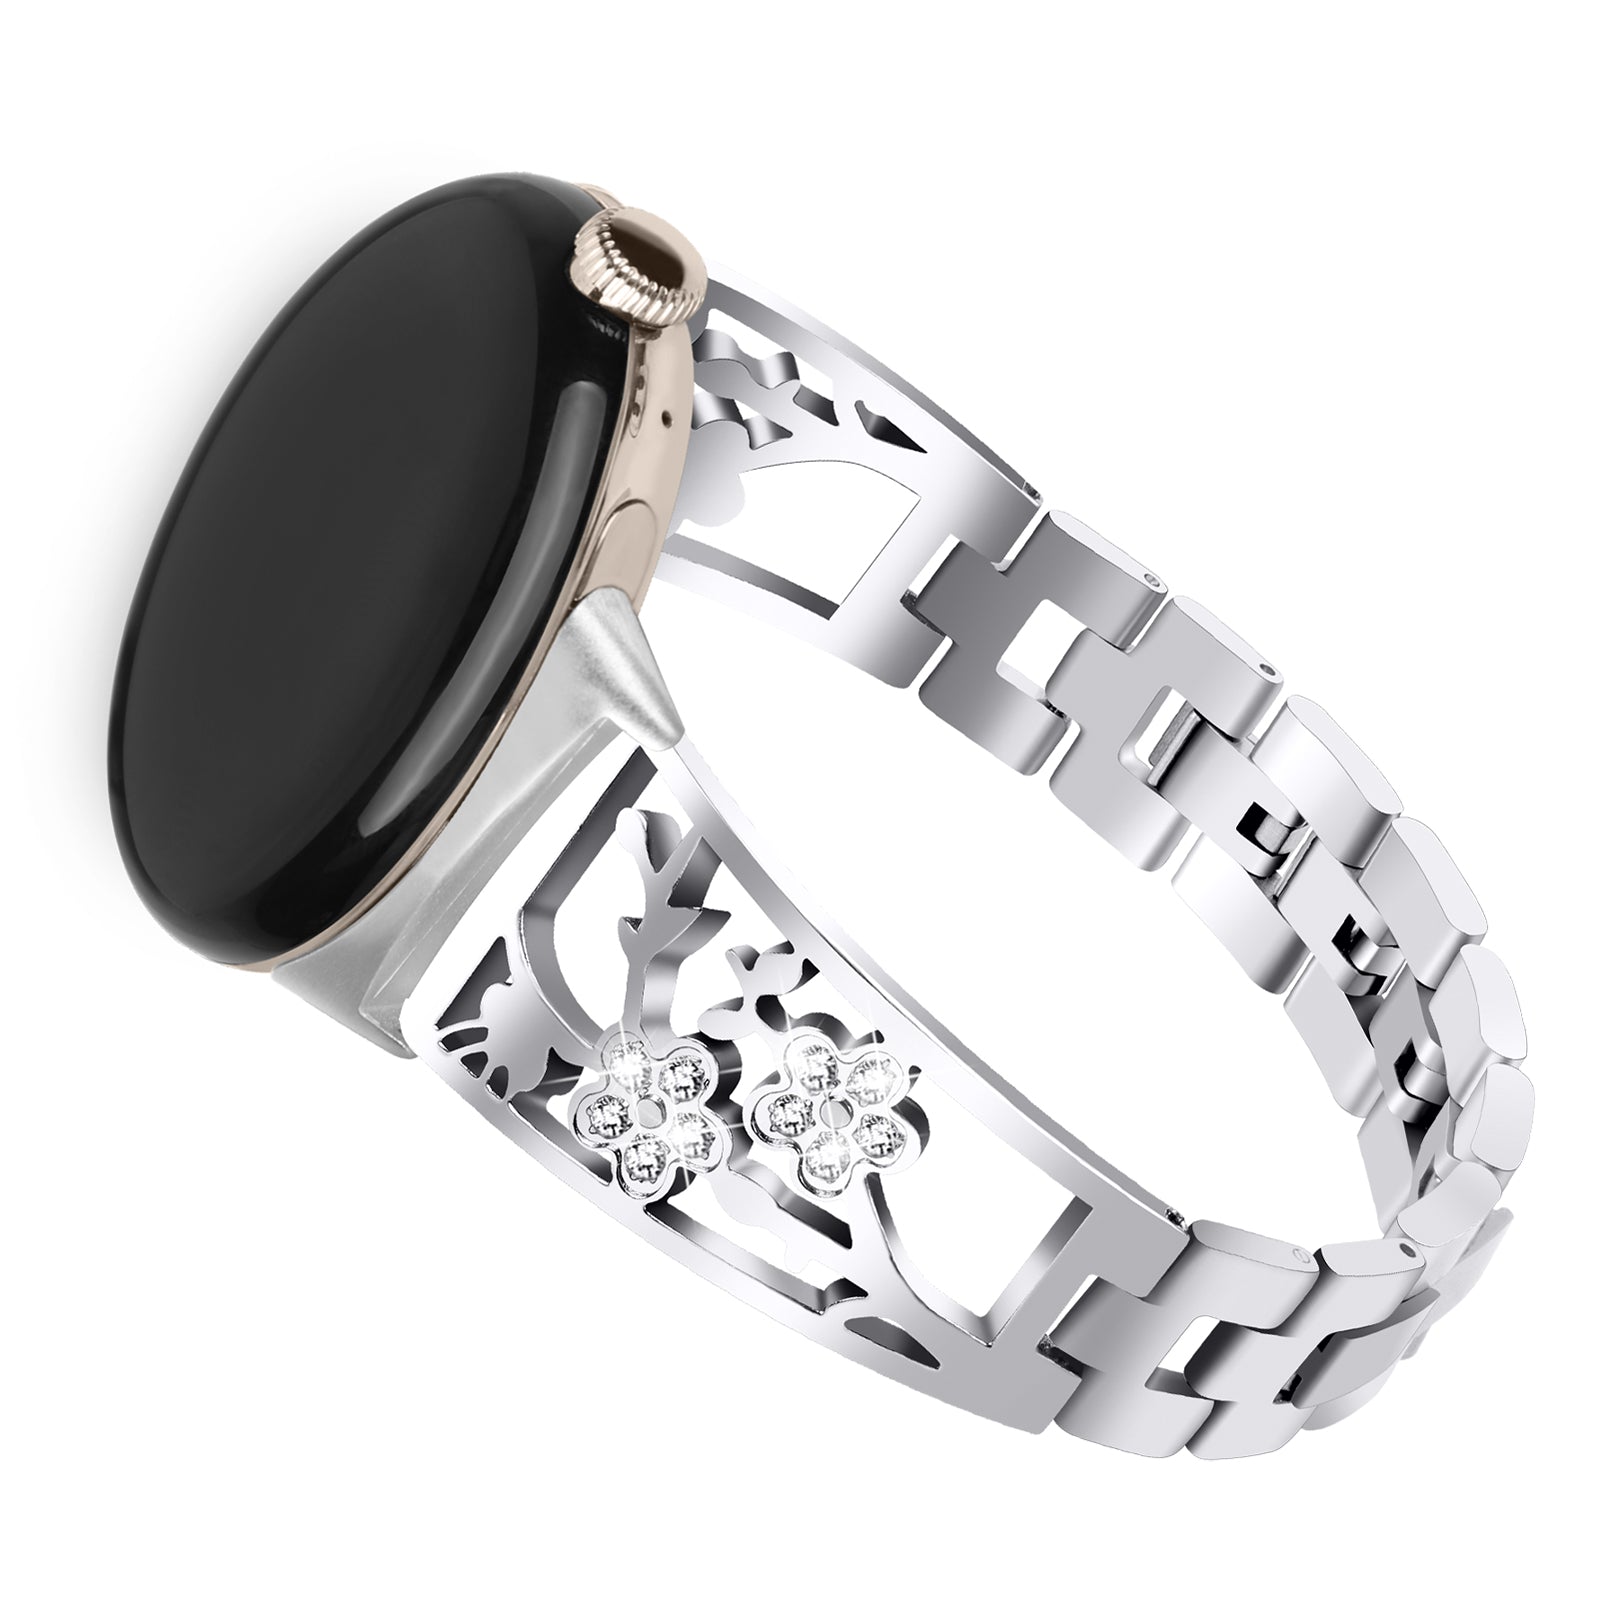 For Google Pixel Watch Rhinestone Decor Plum Design Wrist Strap 304 Stainless Steel Detachable Watch Band Bracelet - Silver